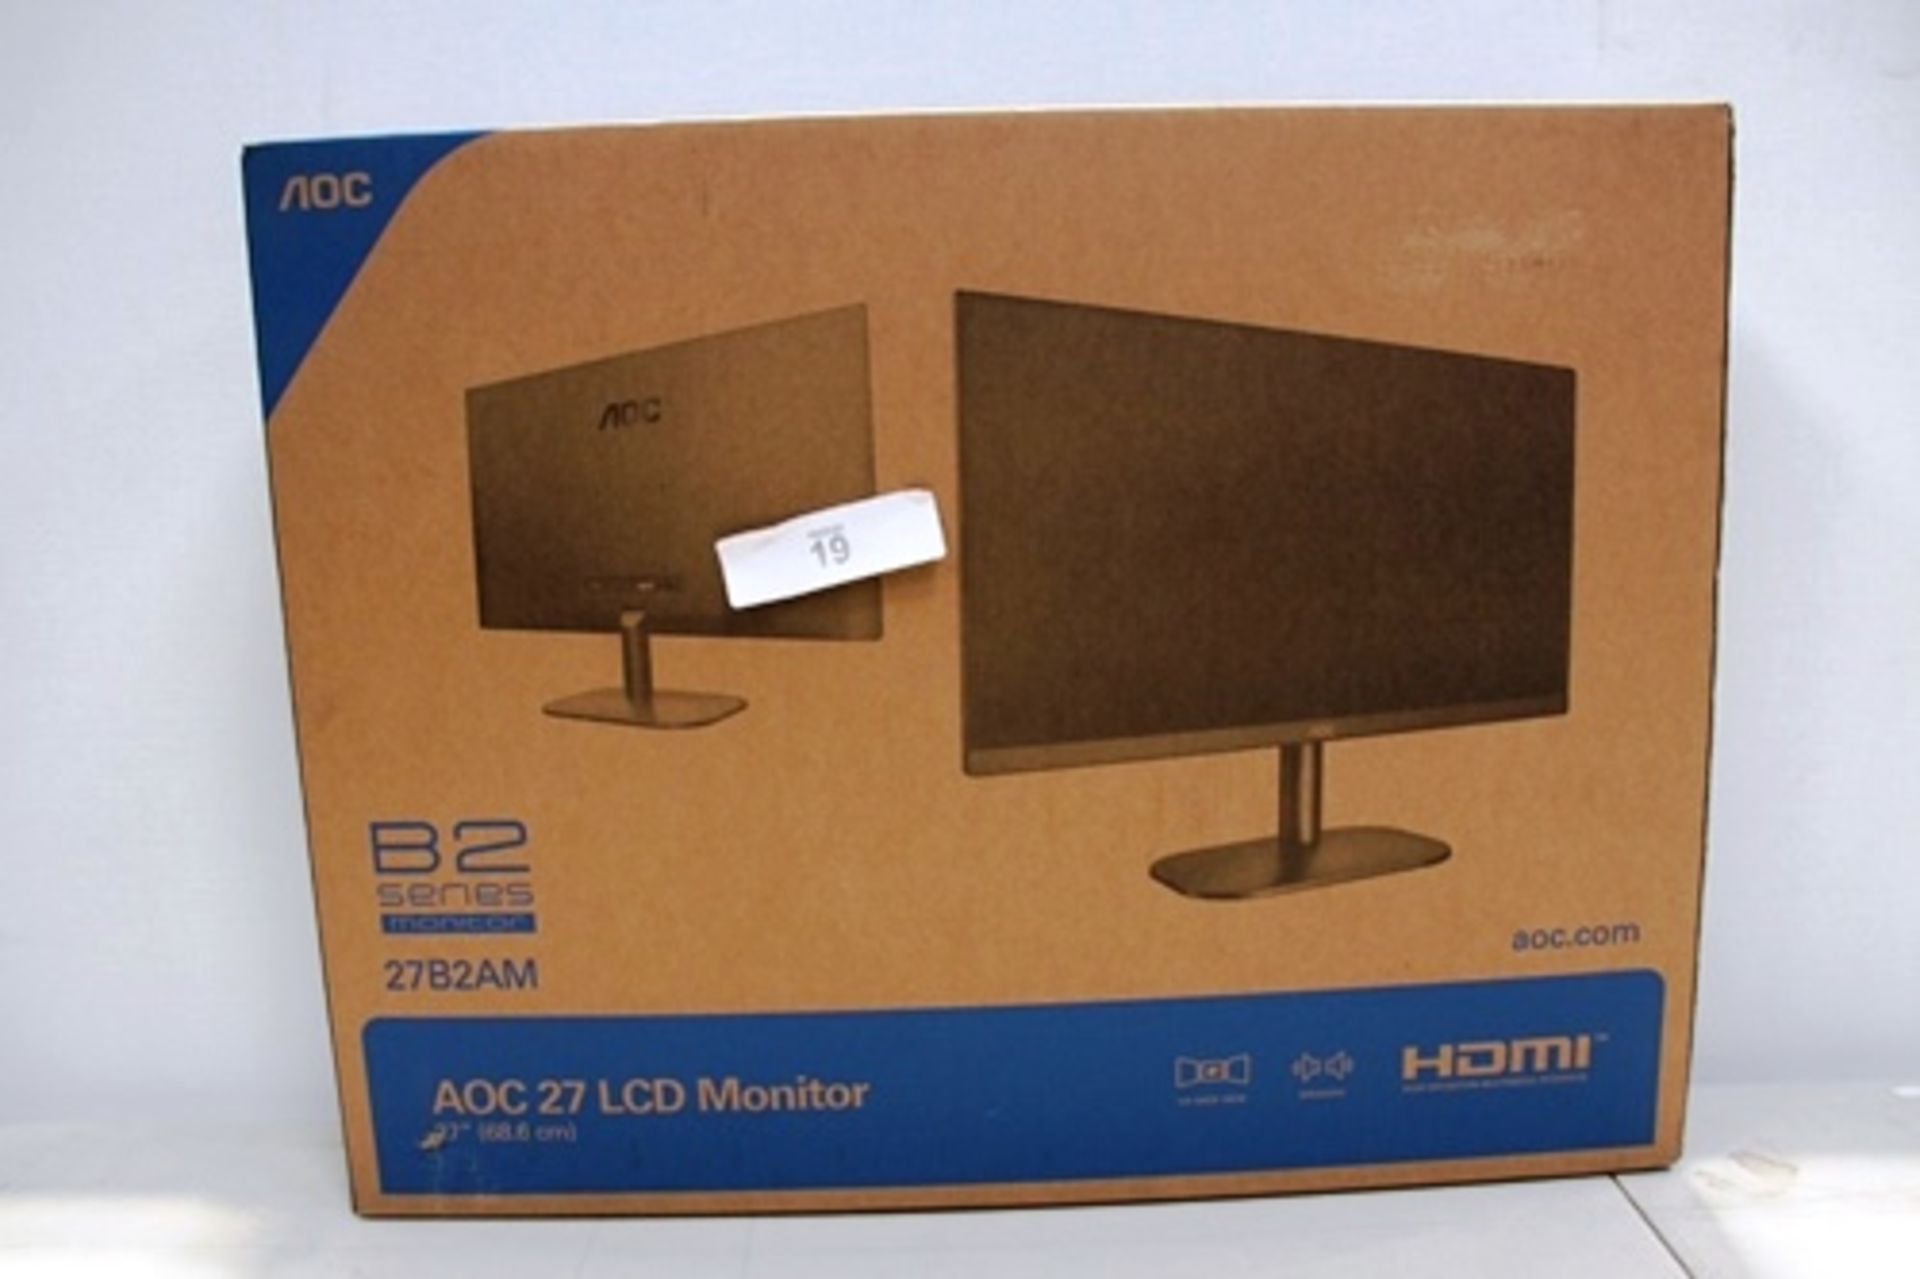 1 x AOC B2 Series LCD monitor, model 27B2AM - Sealed new in box (ES8)